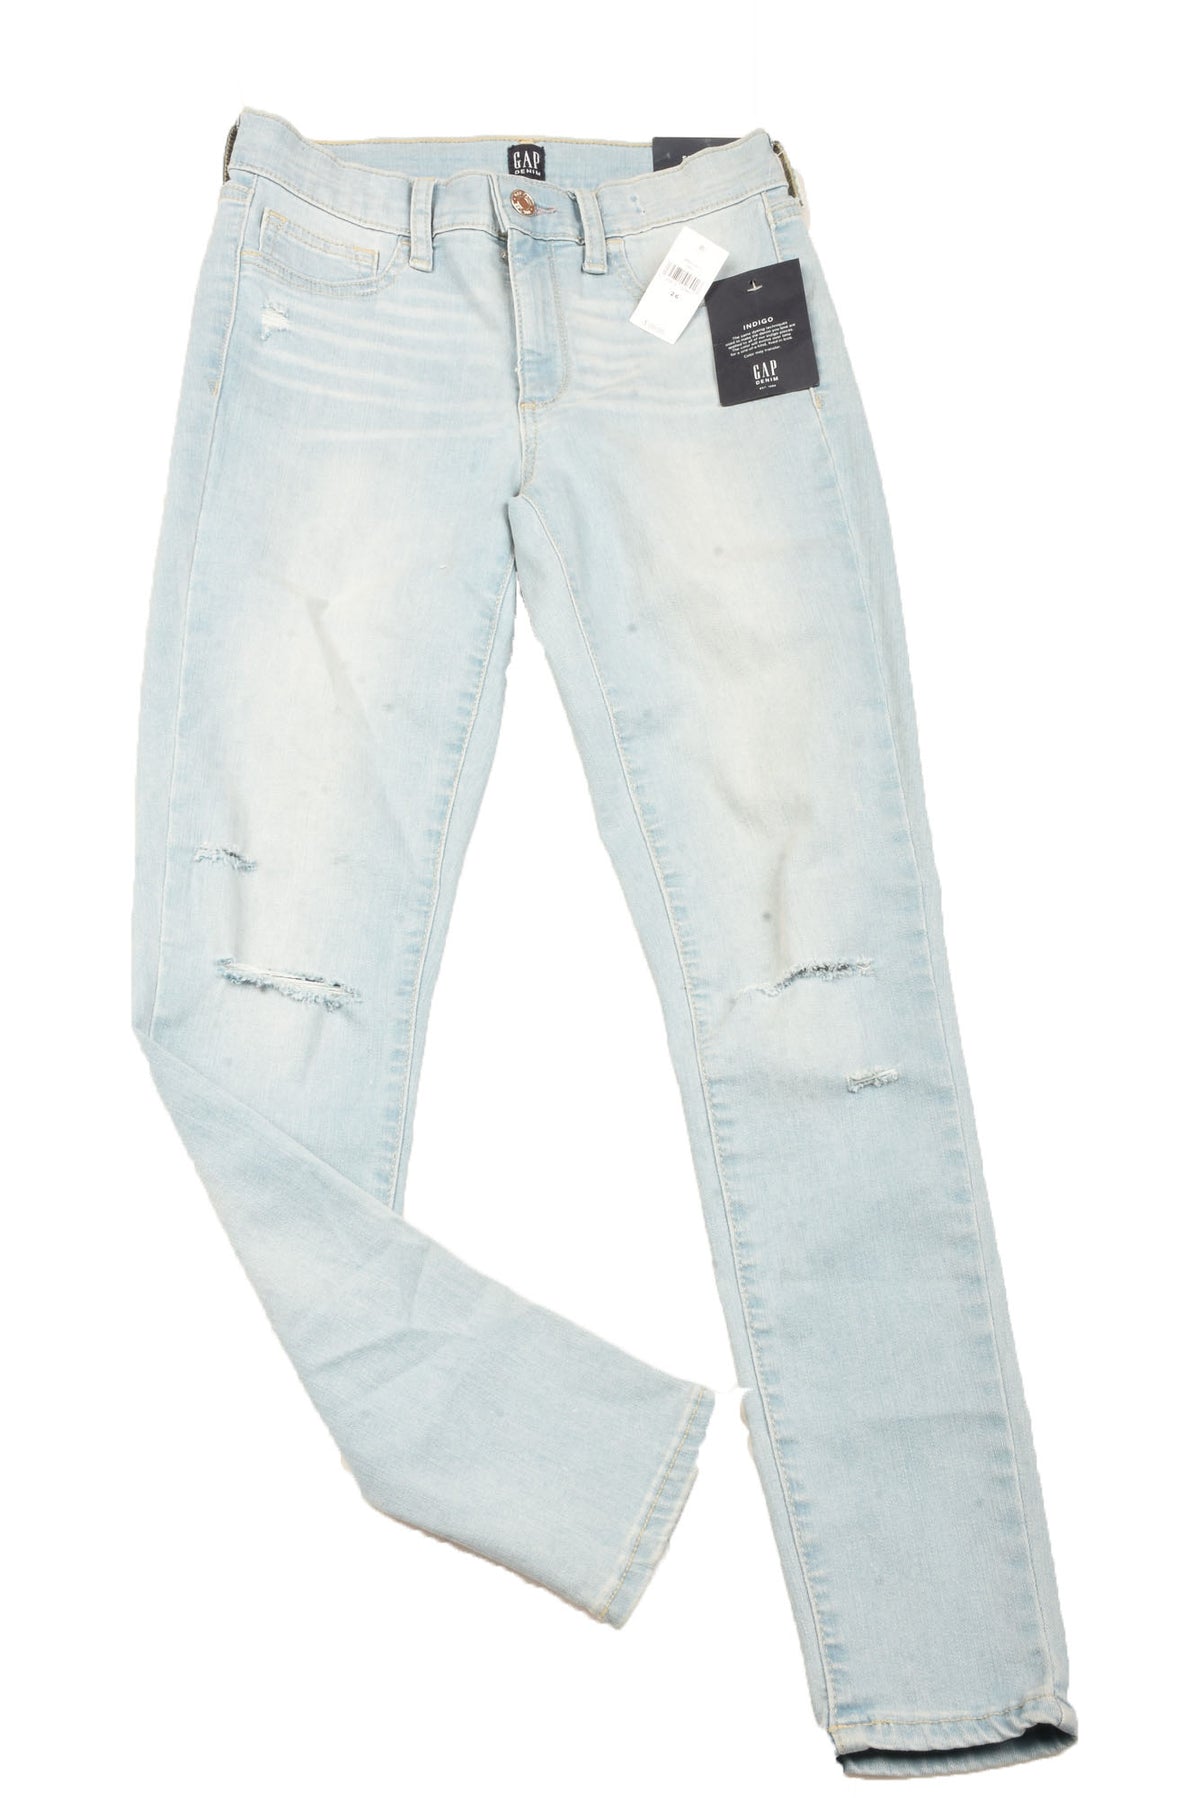 Gap Denim Size 26 Regular Women&#39;s Jeans